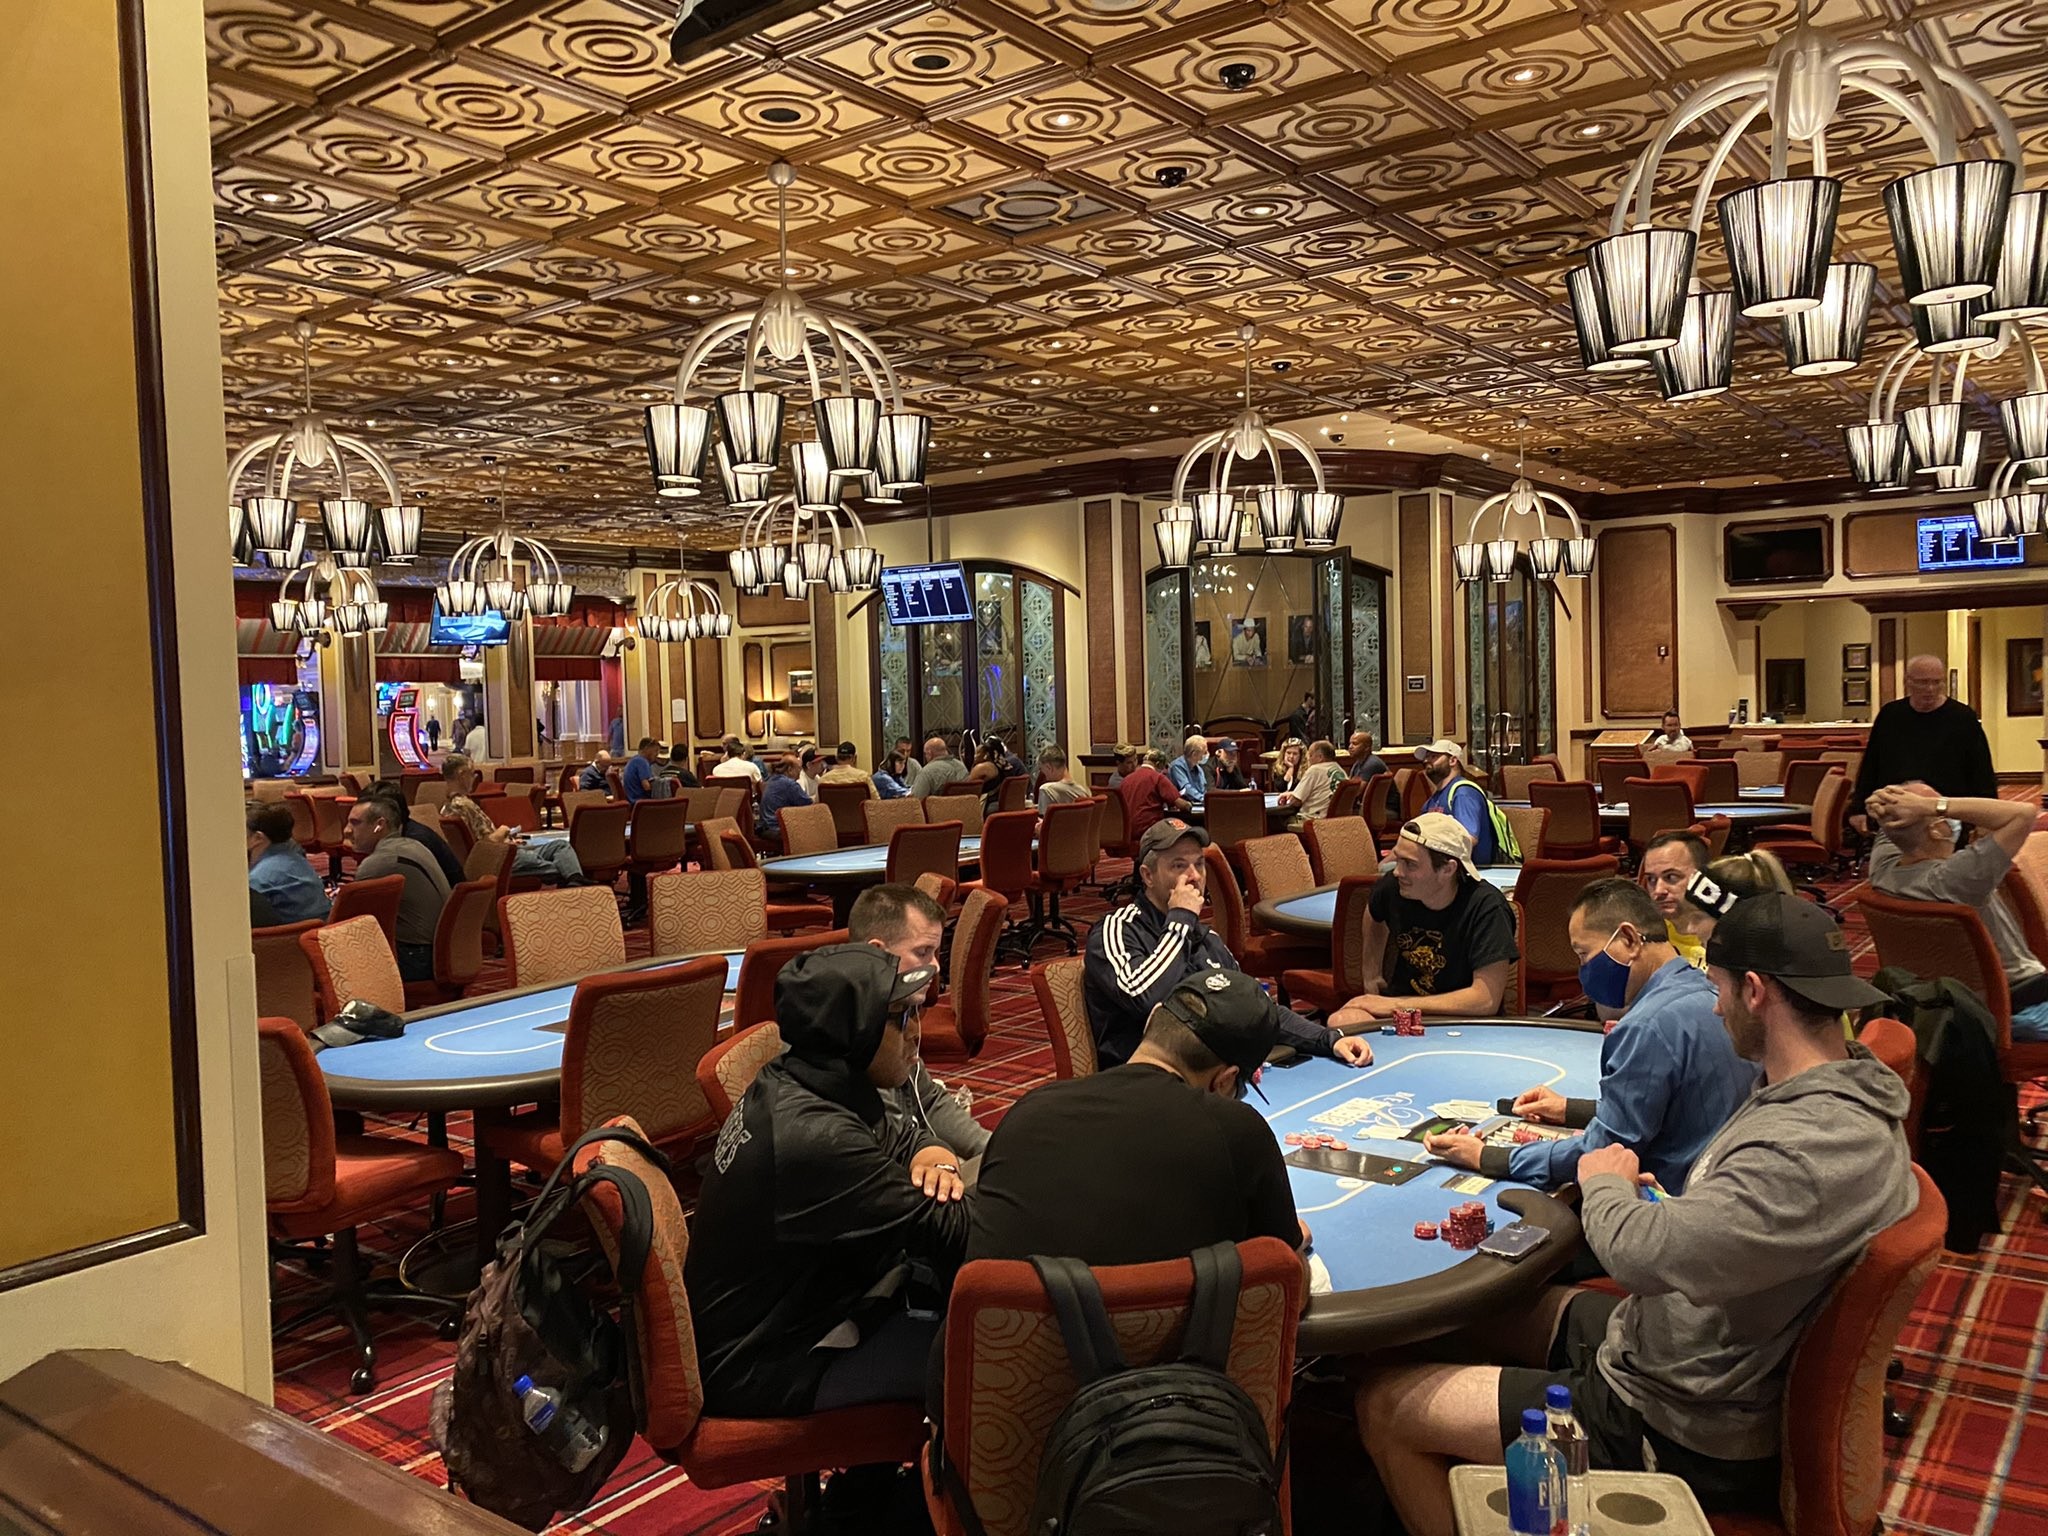 Bellagio Las Vegas - Bobby's Room, inside the Bellagio Poker Room